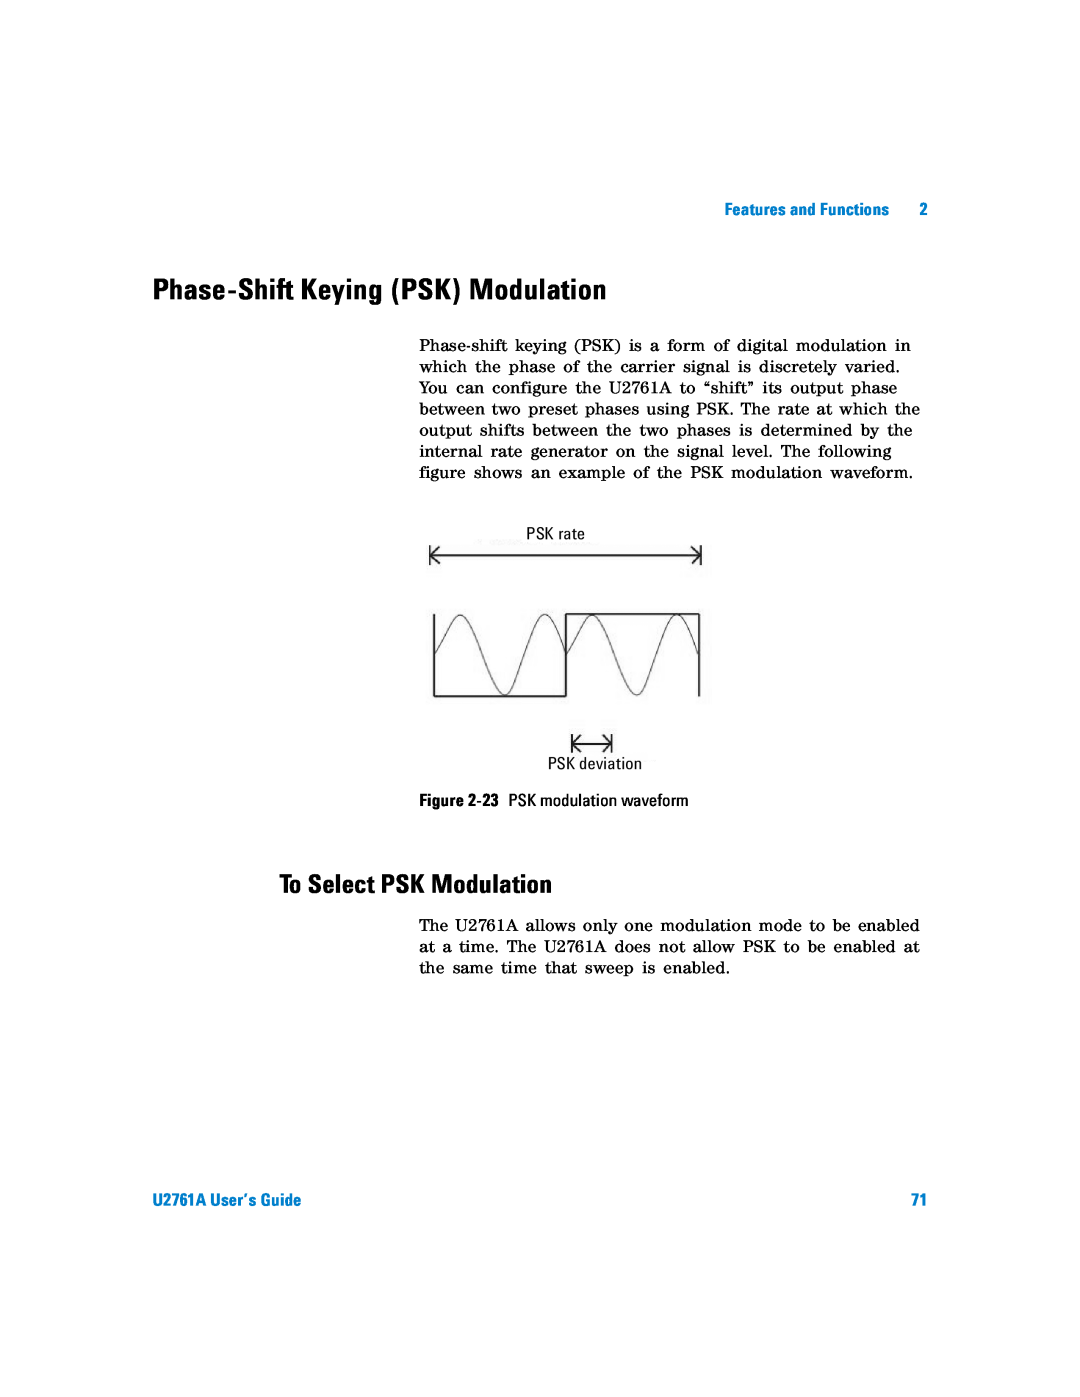 Agilent Technologies manual Phase-Shift Keying PSK Modulation, To Select PSK Modulation, U2761A User’s Guide 